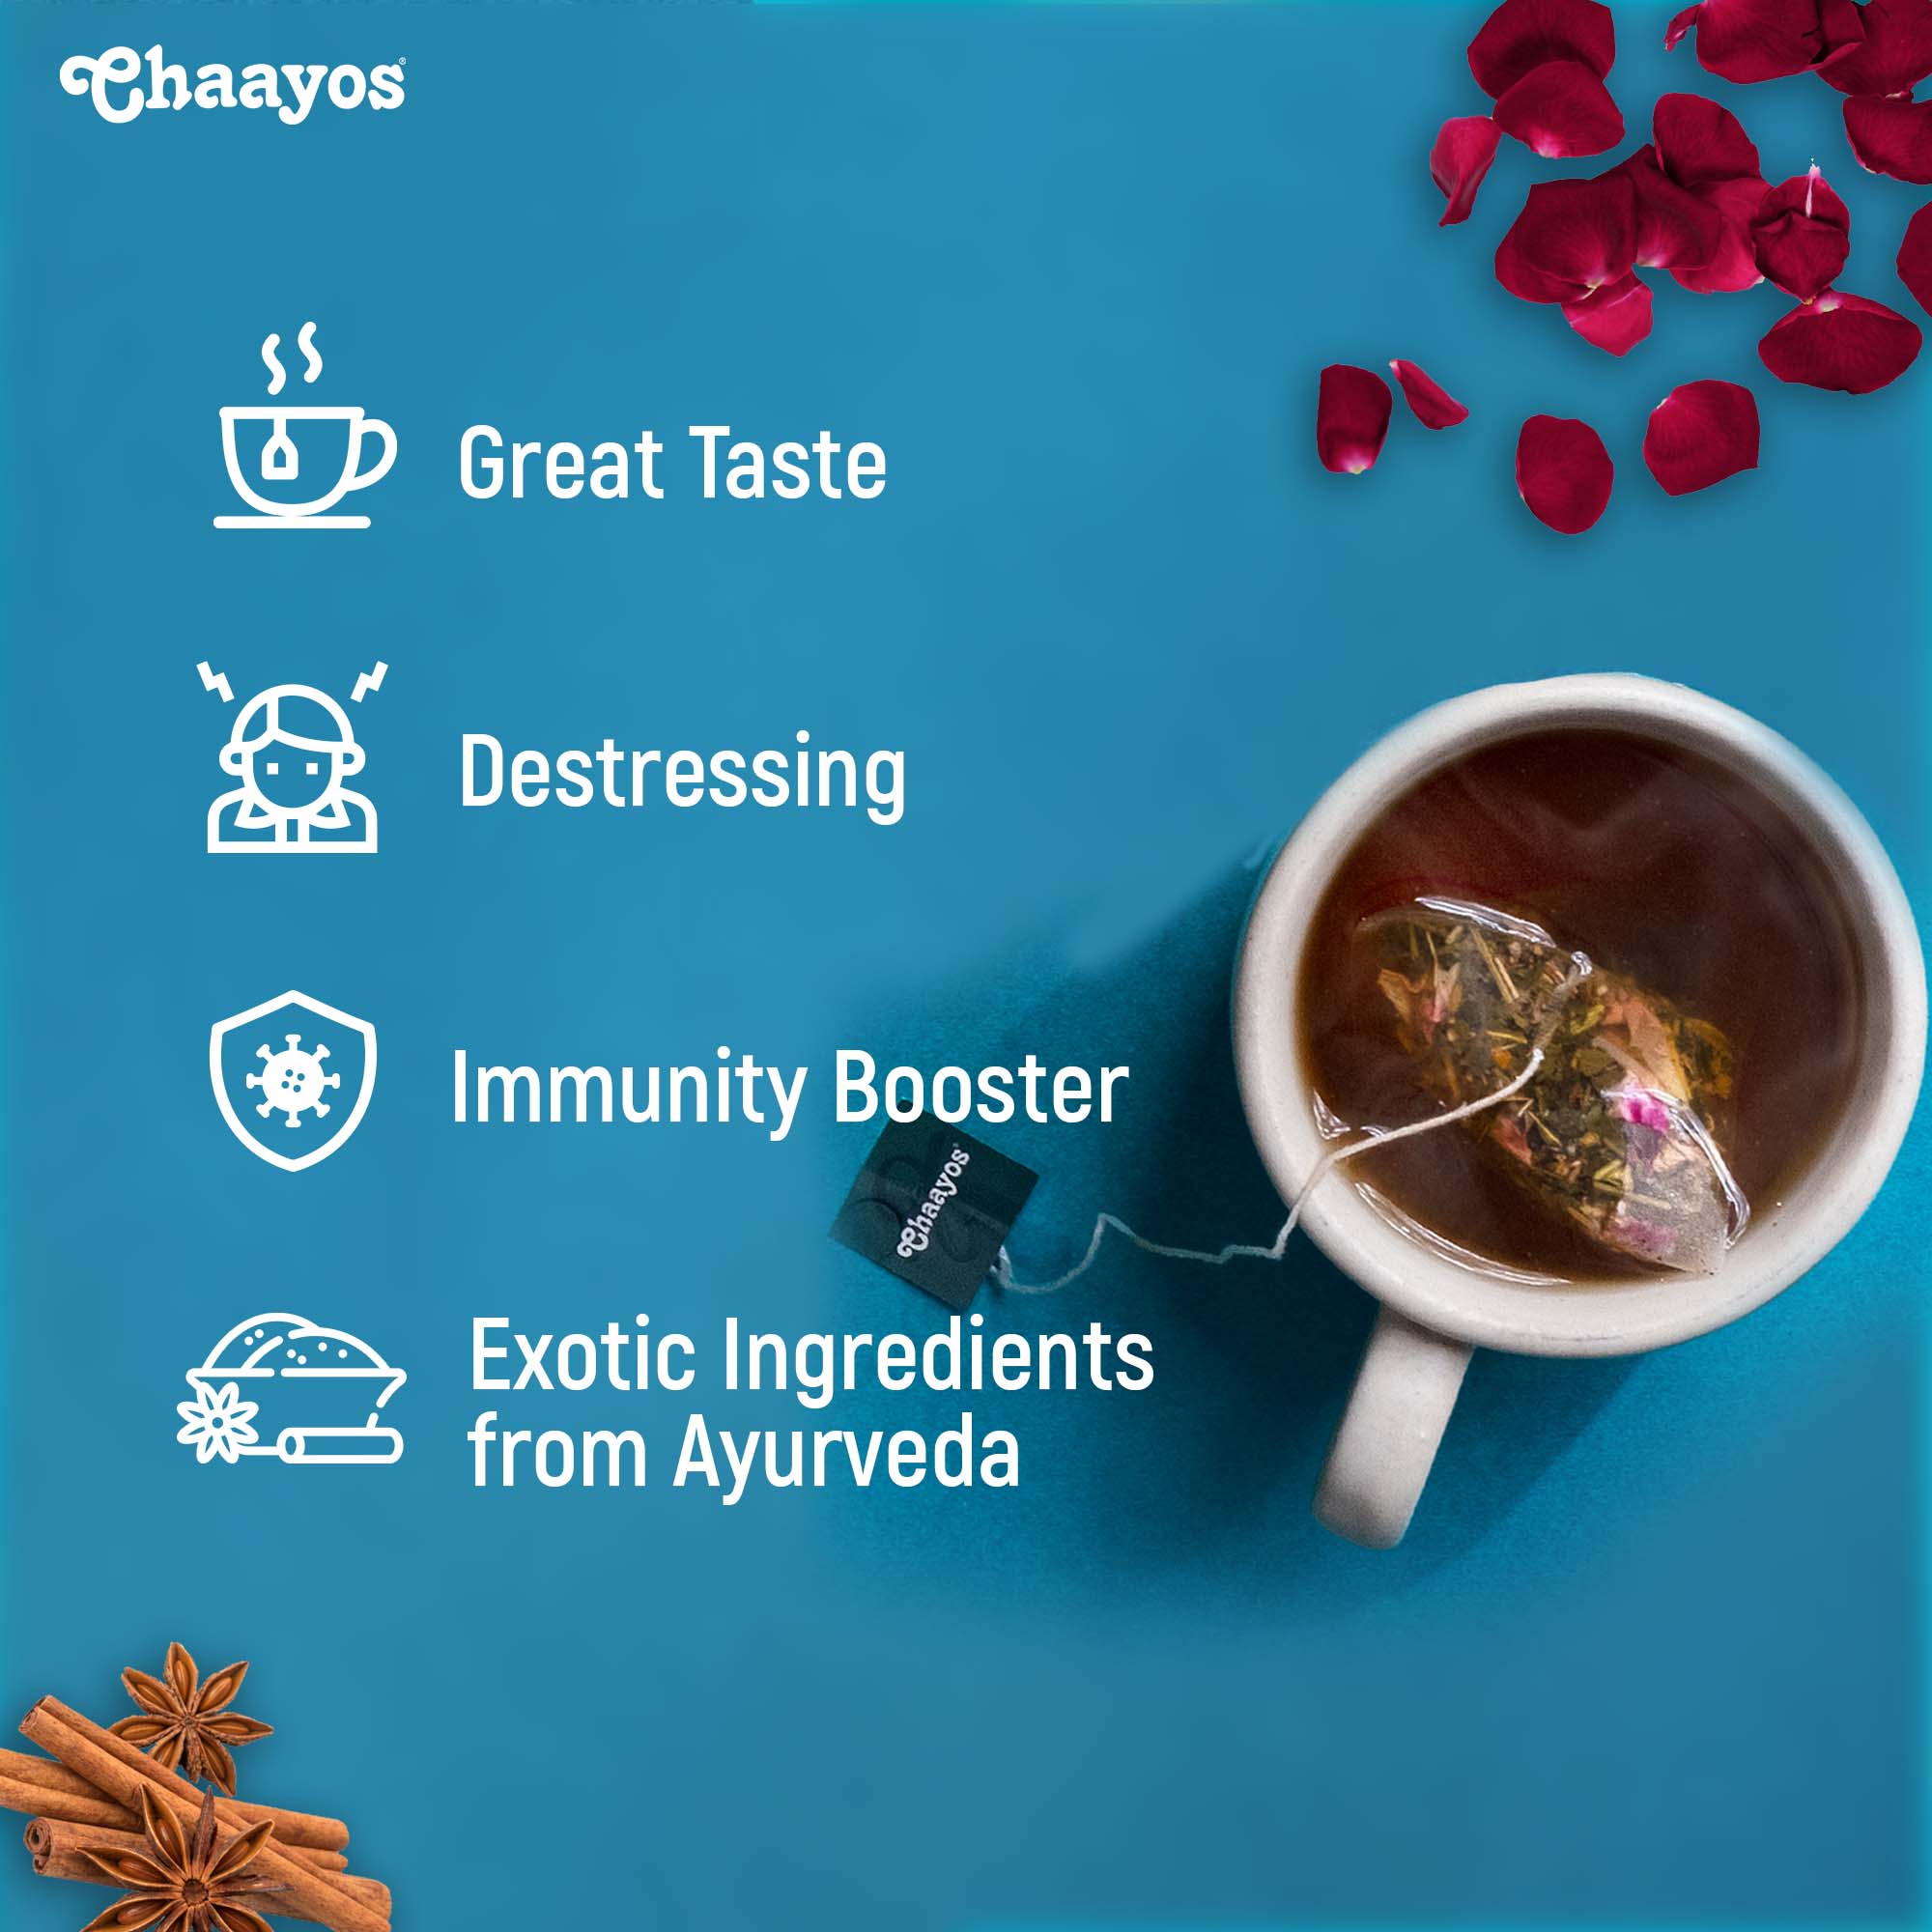 God's Chai Green Tea Bags | Ayurvedic Tea